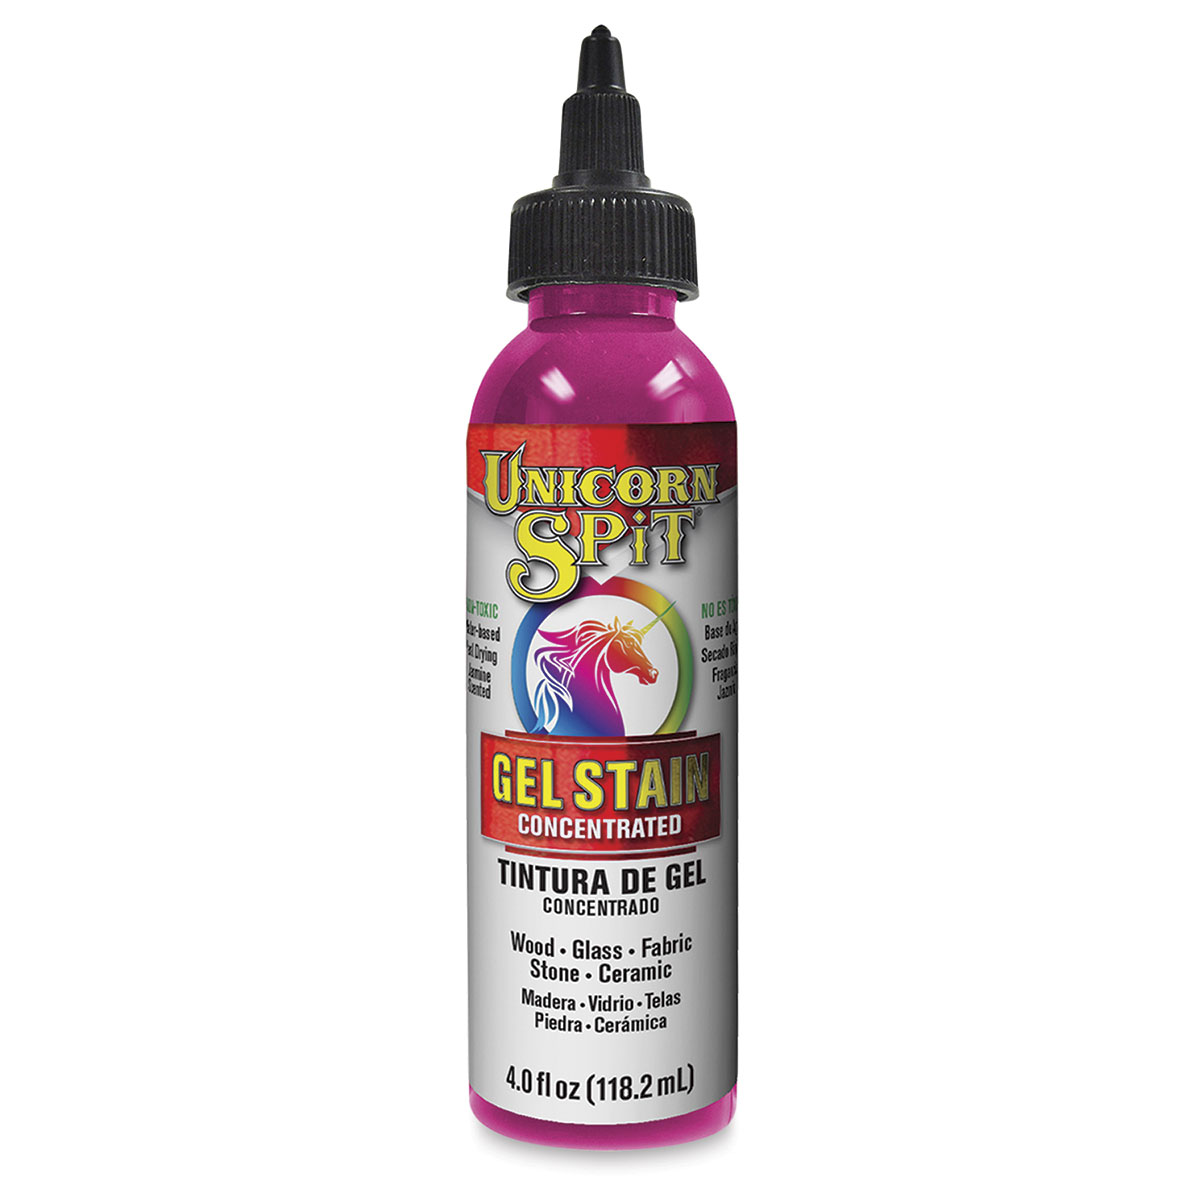 Unicorn Spit Gel Stain and Glaze - Pixie Punk Pink, 4 oz, Bottle